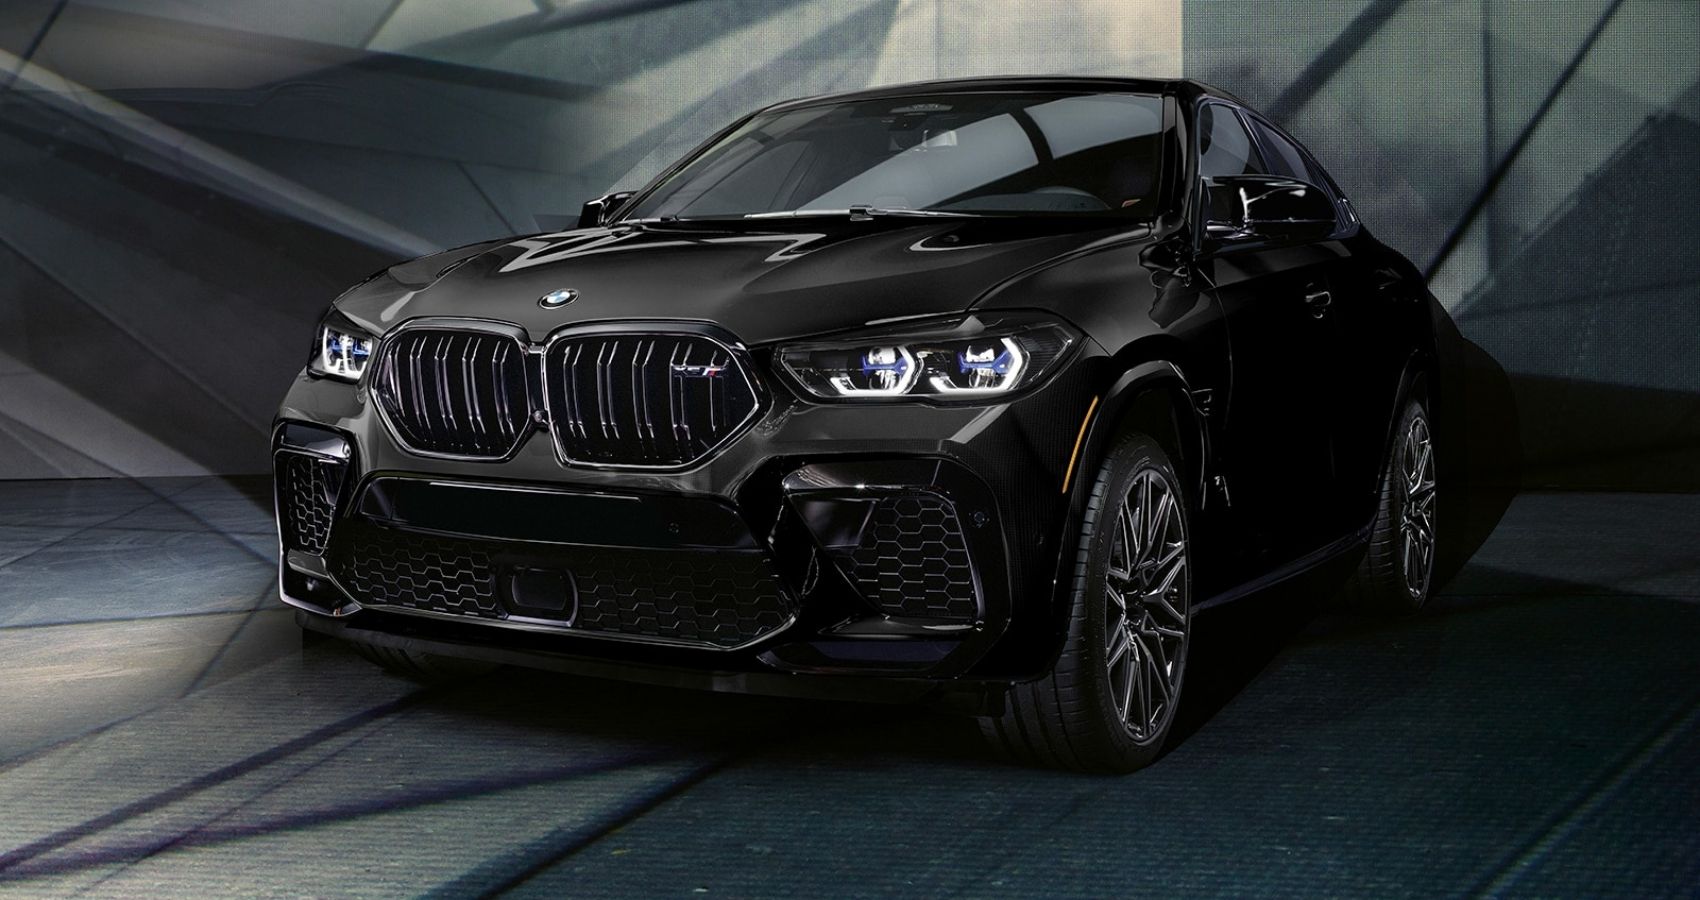 The Phenomenal-looking 2022 BMW X6 M 